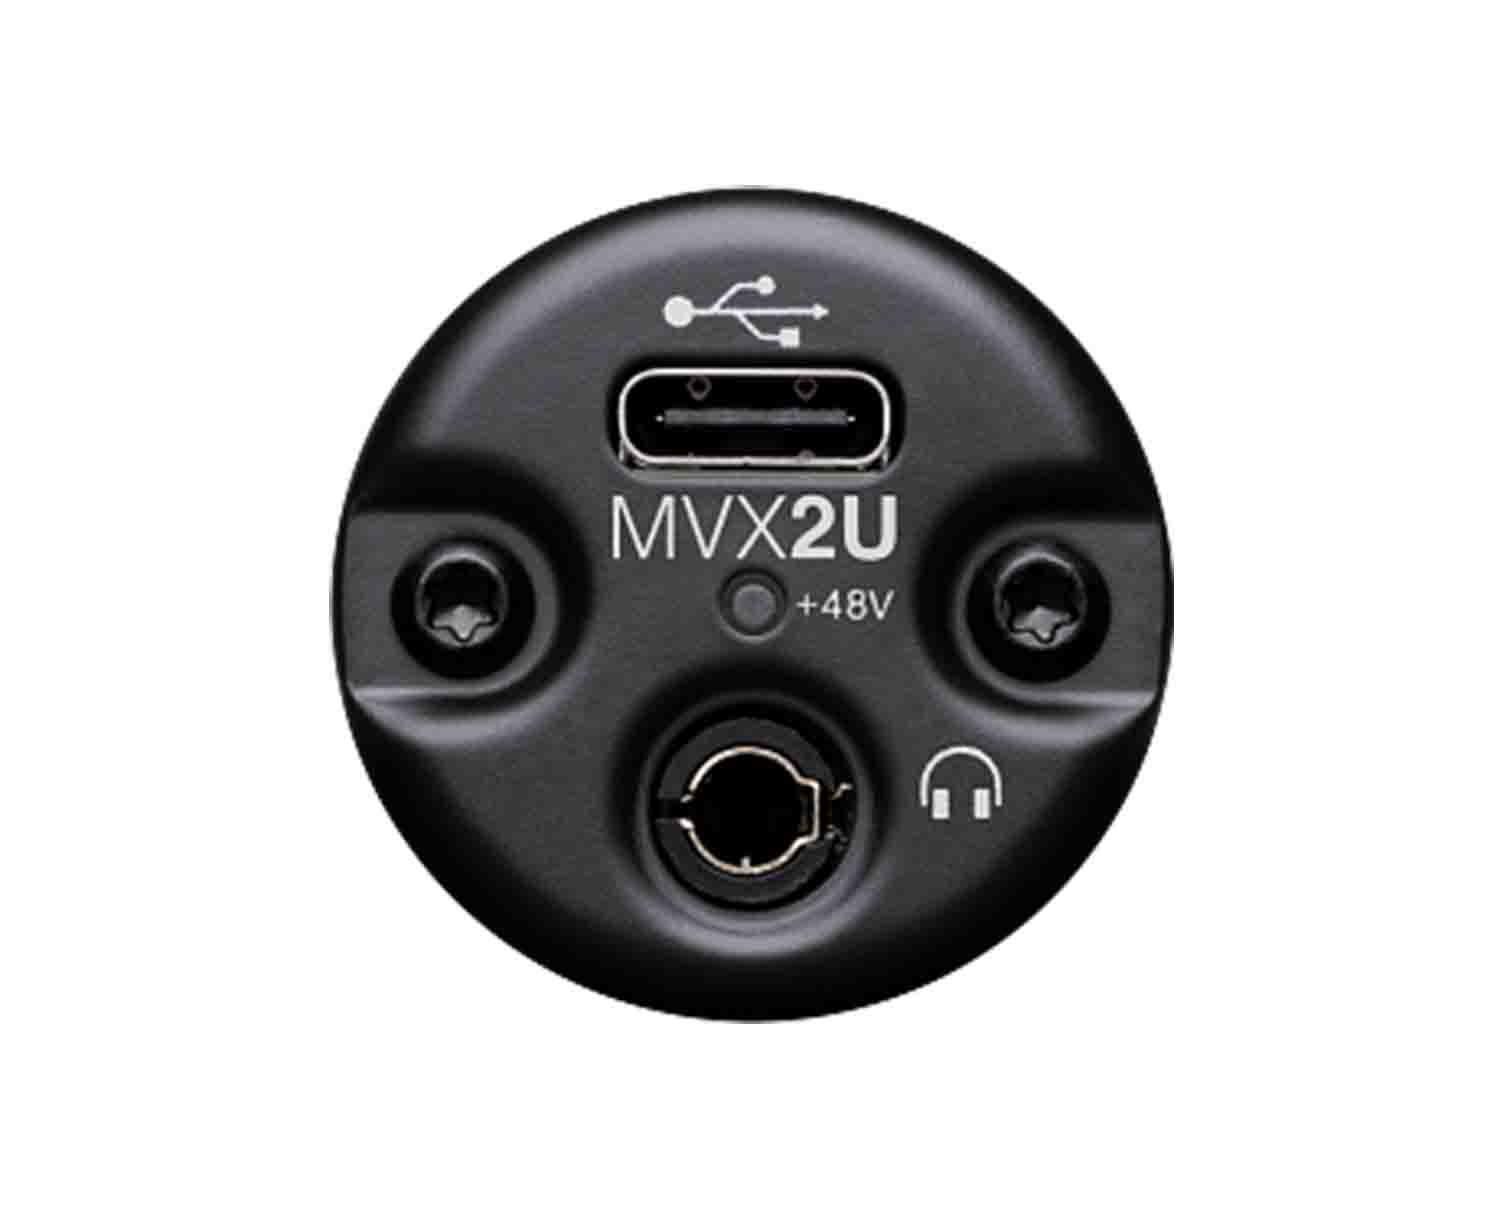 Shure MVX2U Motiv Digital Audio Interface XLR to USB Adaptor with Headphone Output - Hollywood DJ